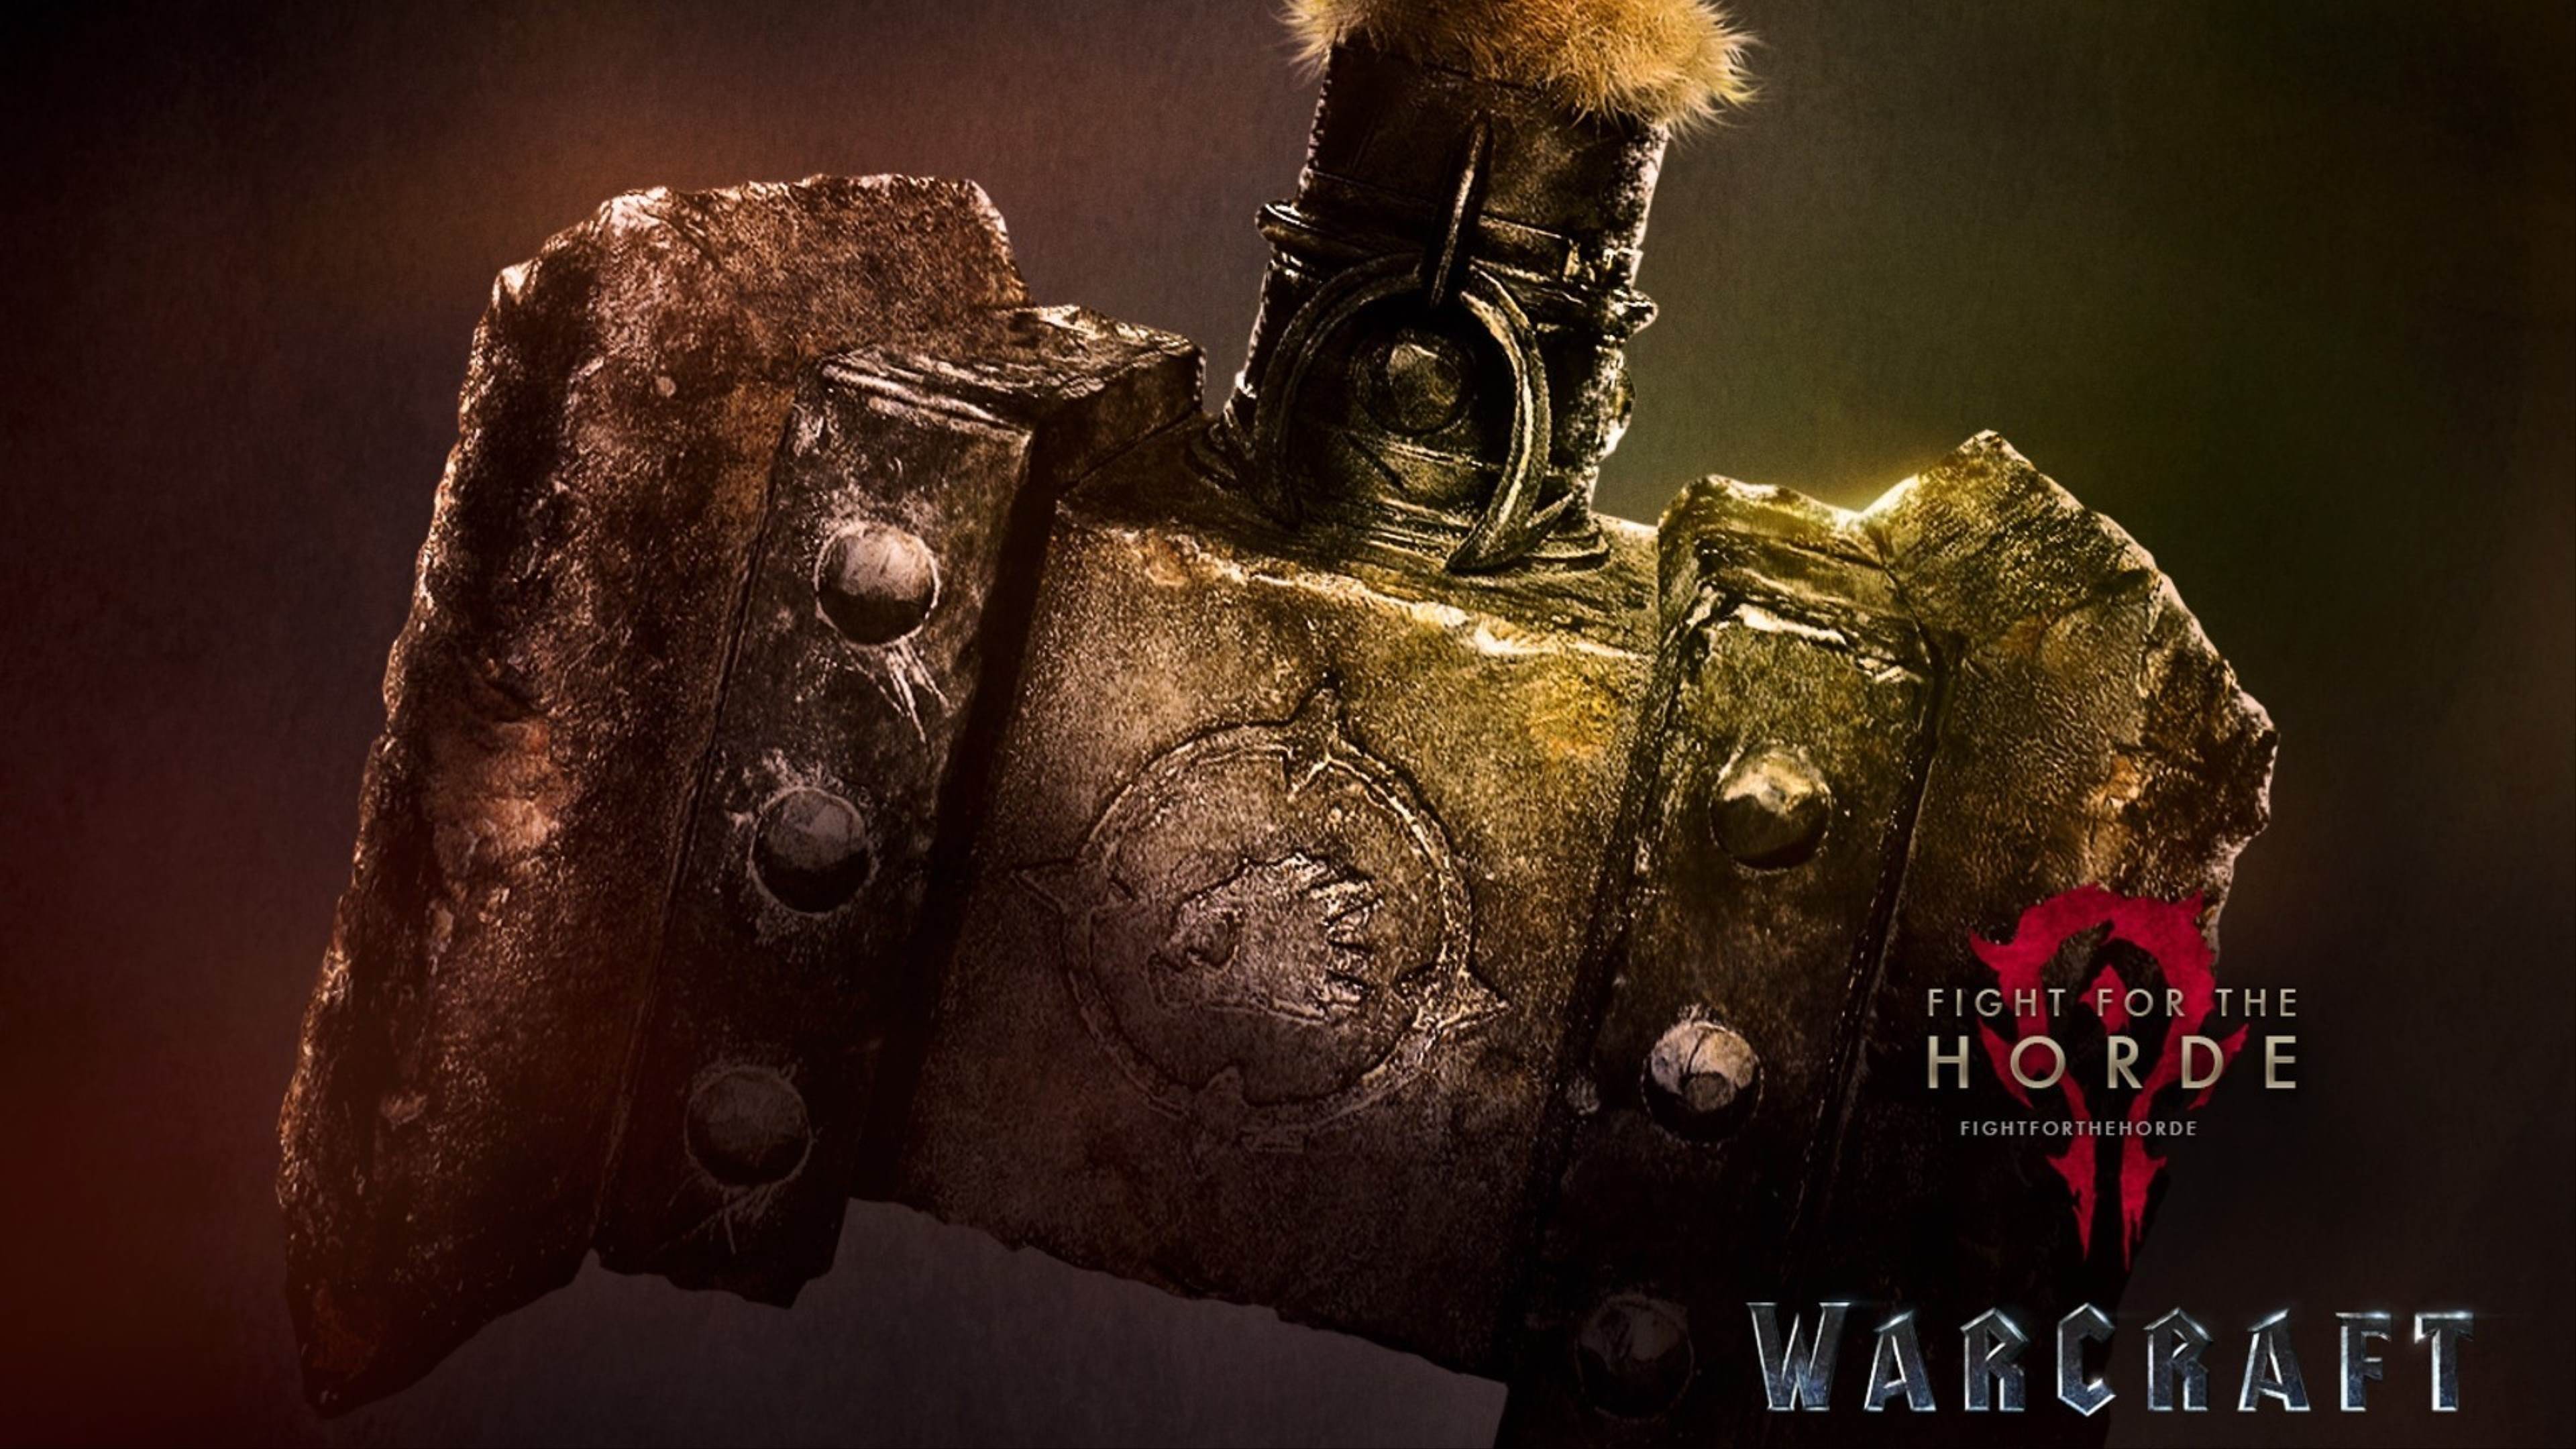 Horde Warcraft HD Movies, 4k Wallpaper, Image, Background